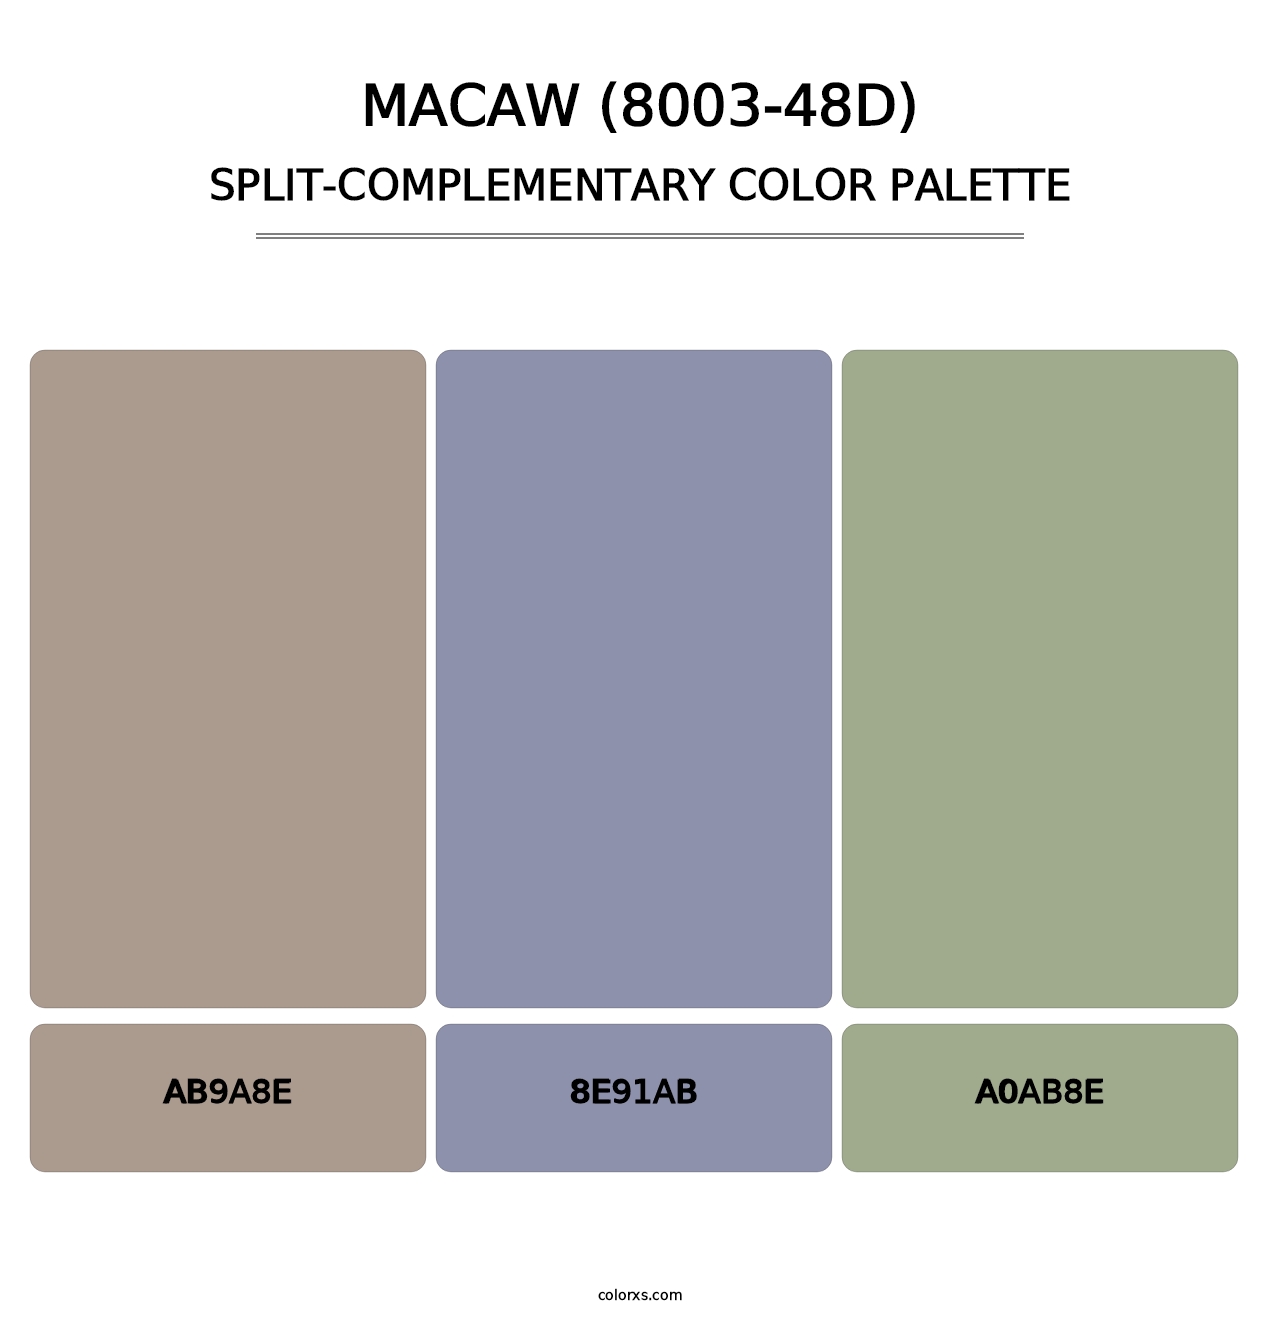 Macaw (8003-48D) - Split-Complementary Color Palette